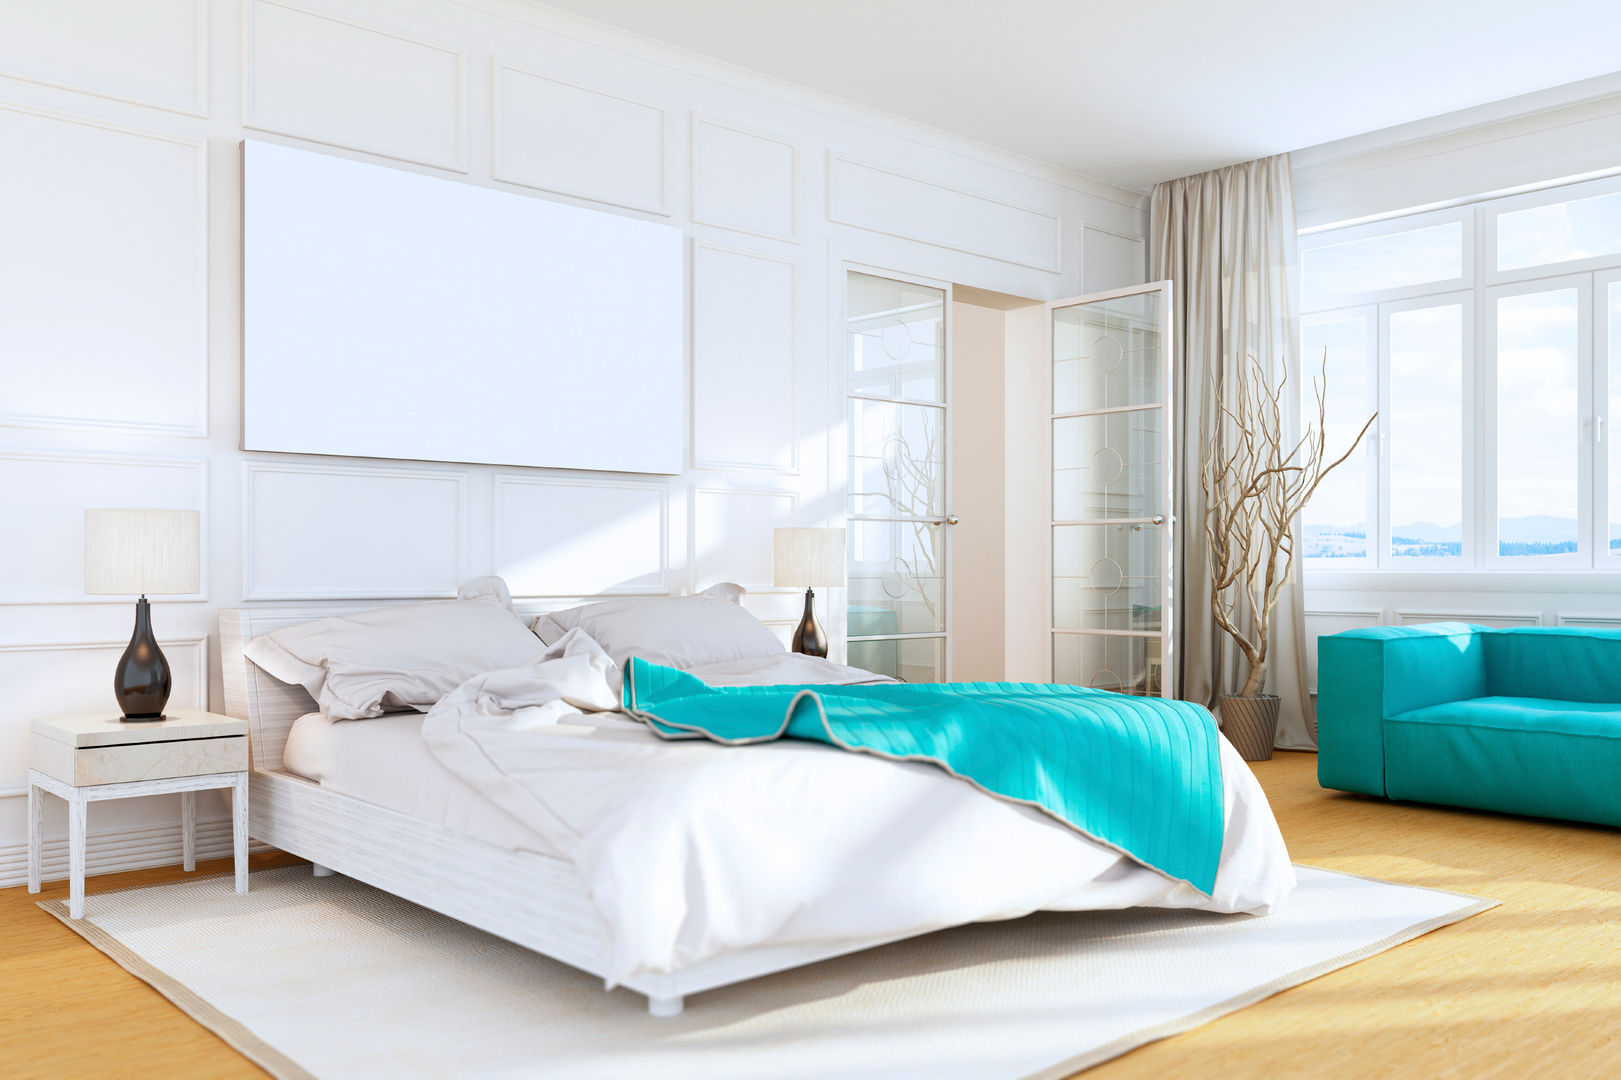 Beach House Bedroom Gracious Luxury Interiors Quartos minimalistas Torquoise,Blue,beach house,White,Bright,Pastel,Minimal,Pop of Color